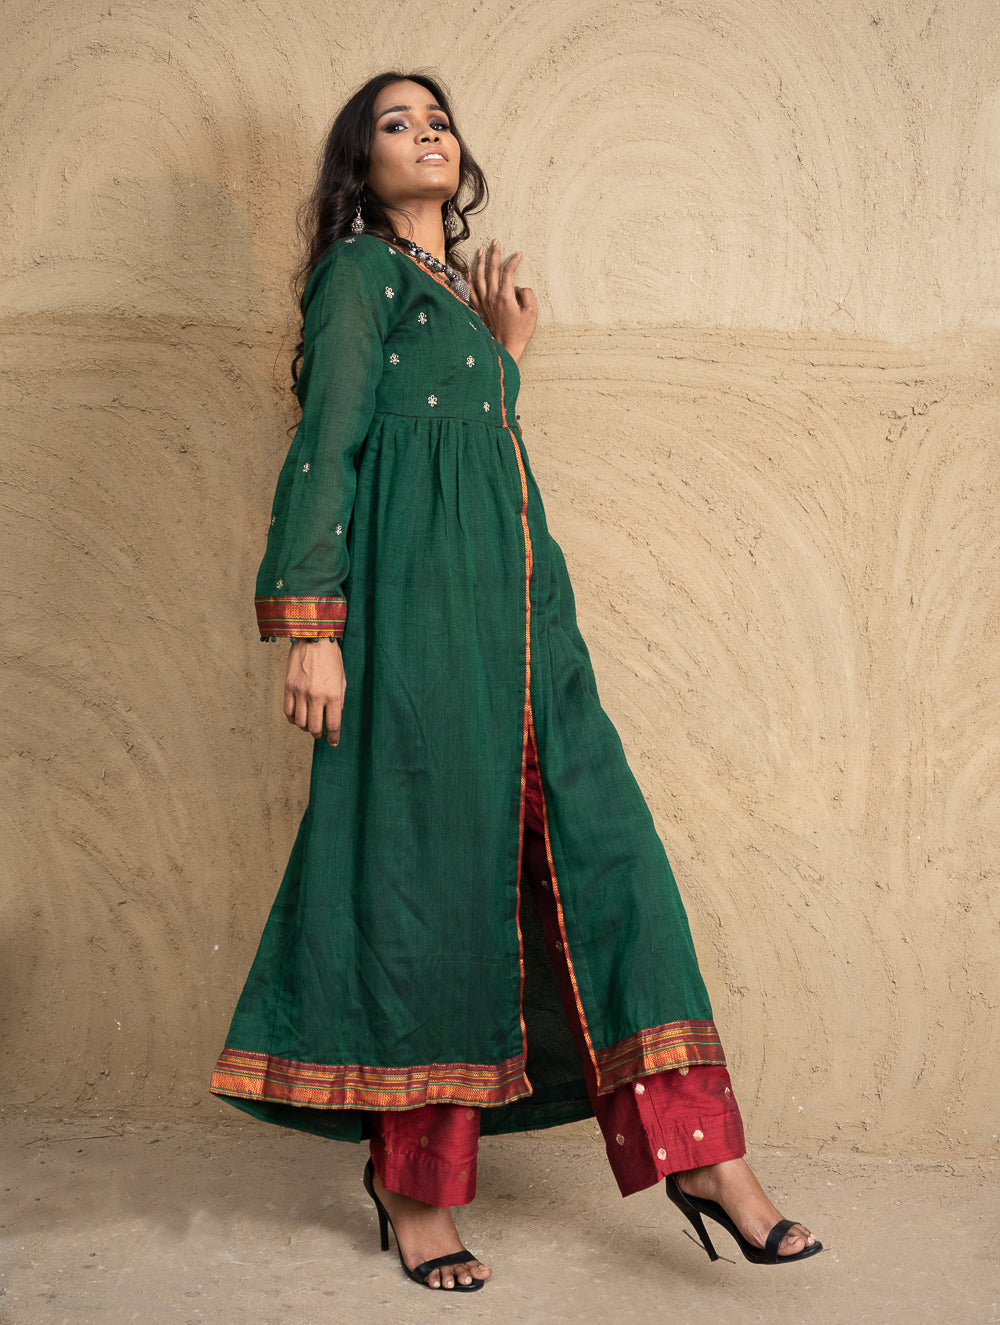 Load image into Gallery viewer, Traditional Elegance. Hand Embroidered Ilkal &amp; Zardozi Ethnic  Kurta / Dress - Royal Emerald